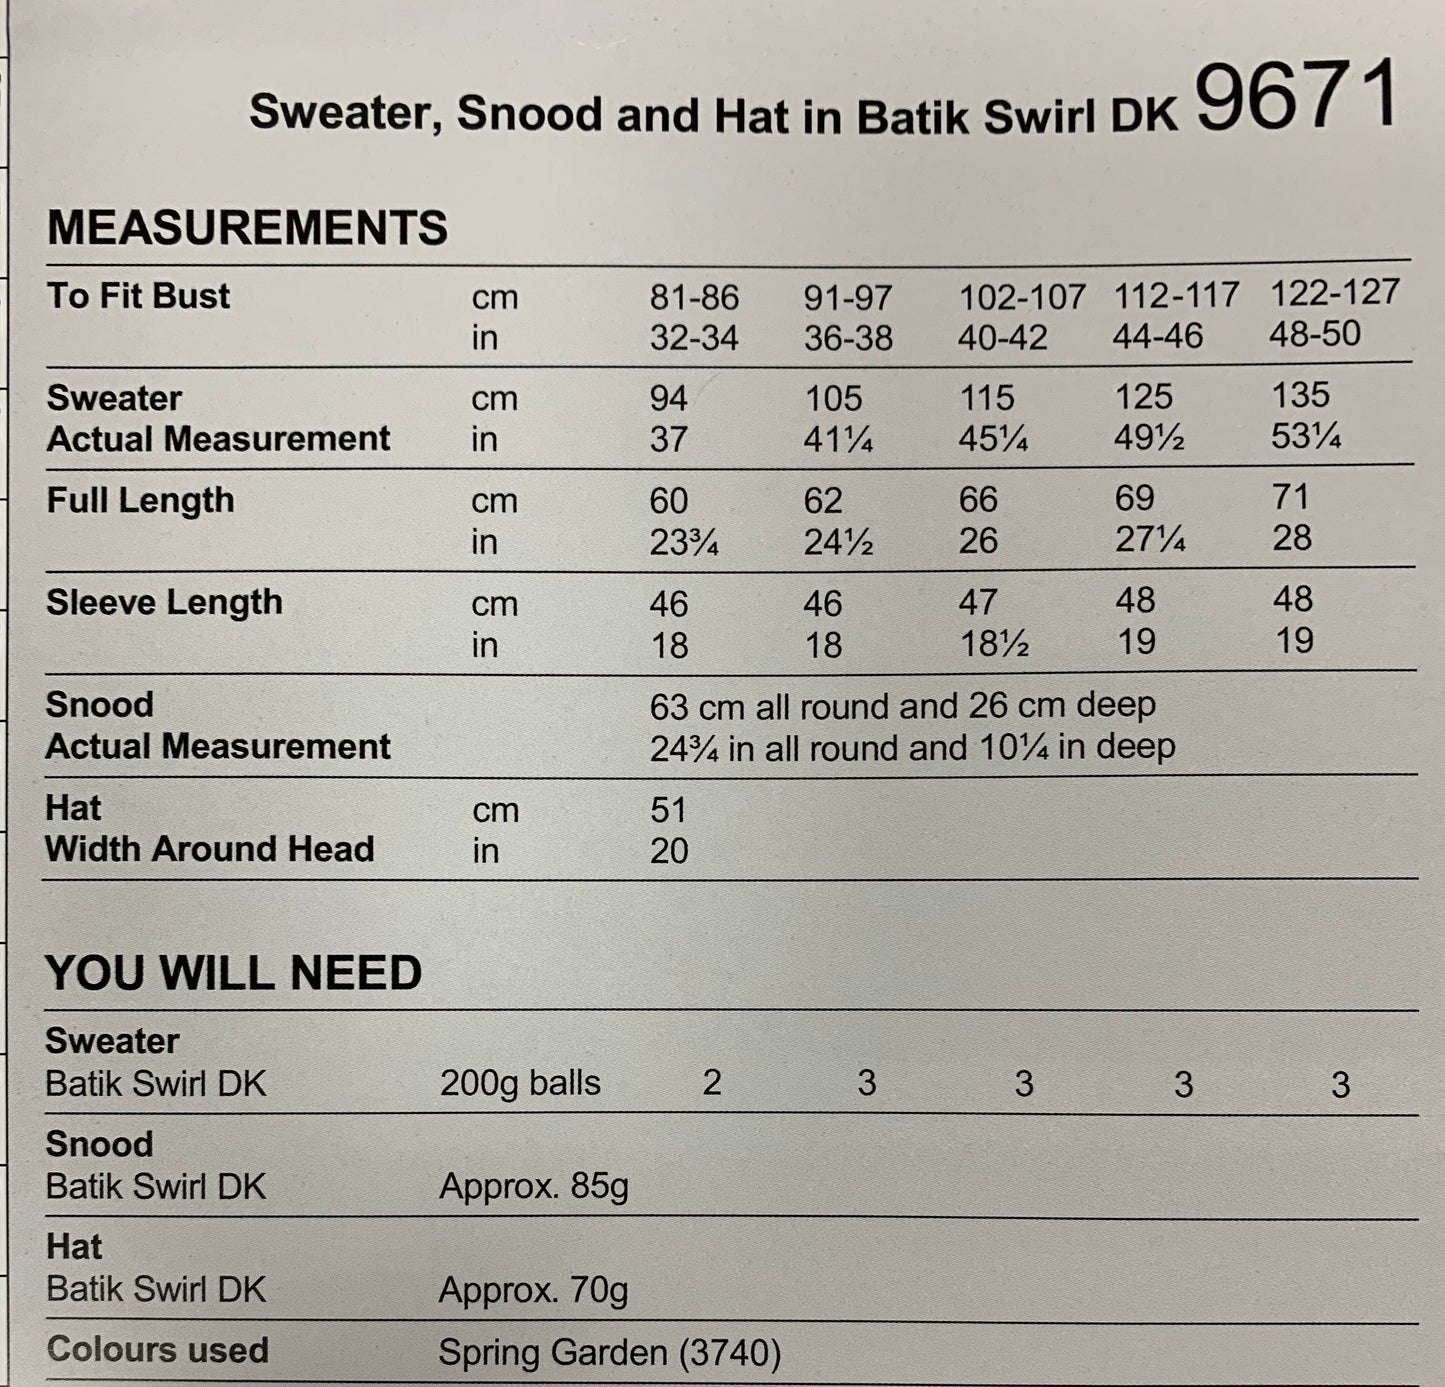 9671 Stylecraft batik swirl dk ladies sweater, snood and hat knitting pattern